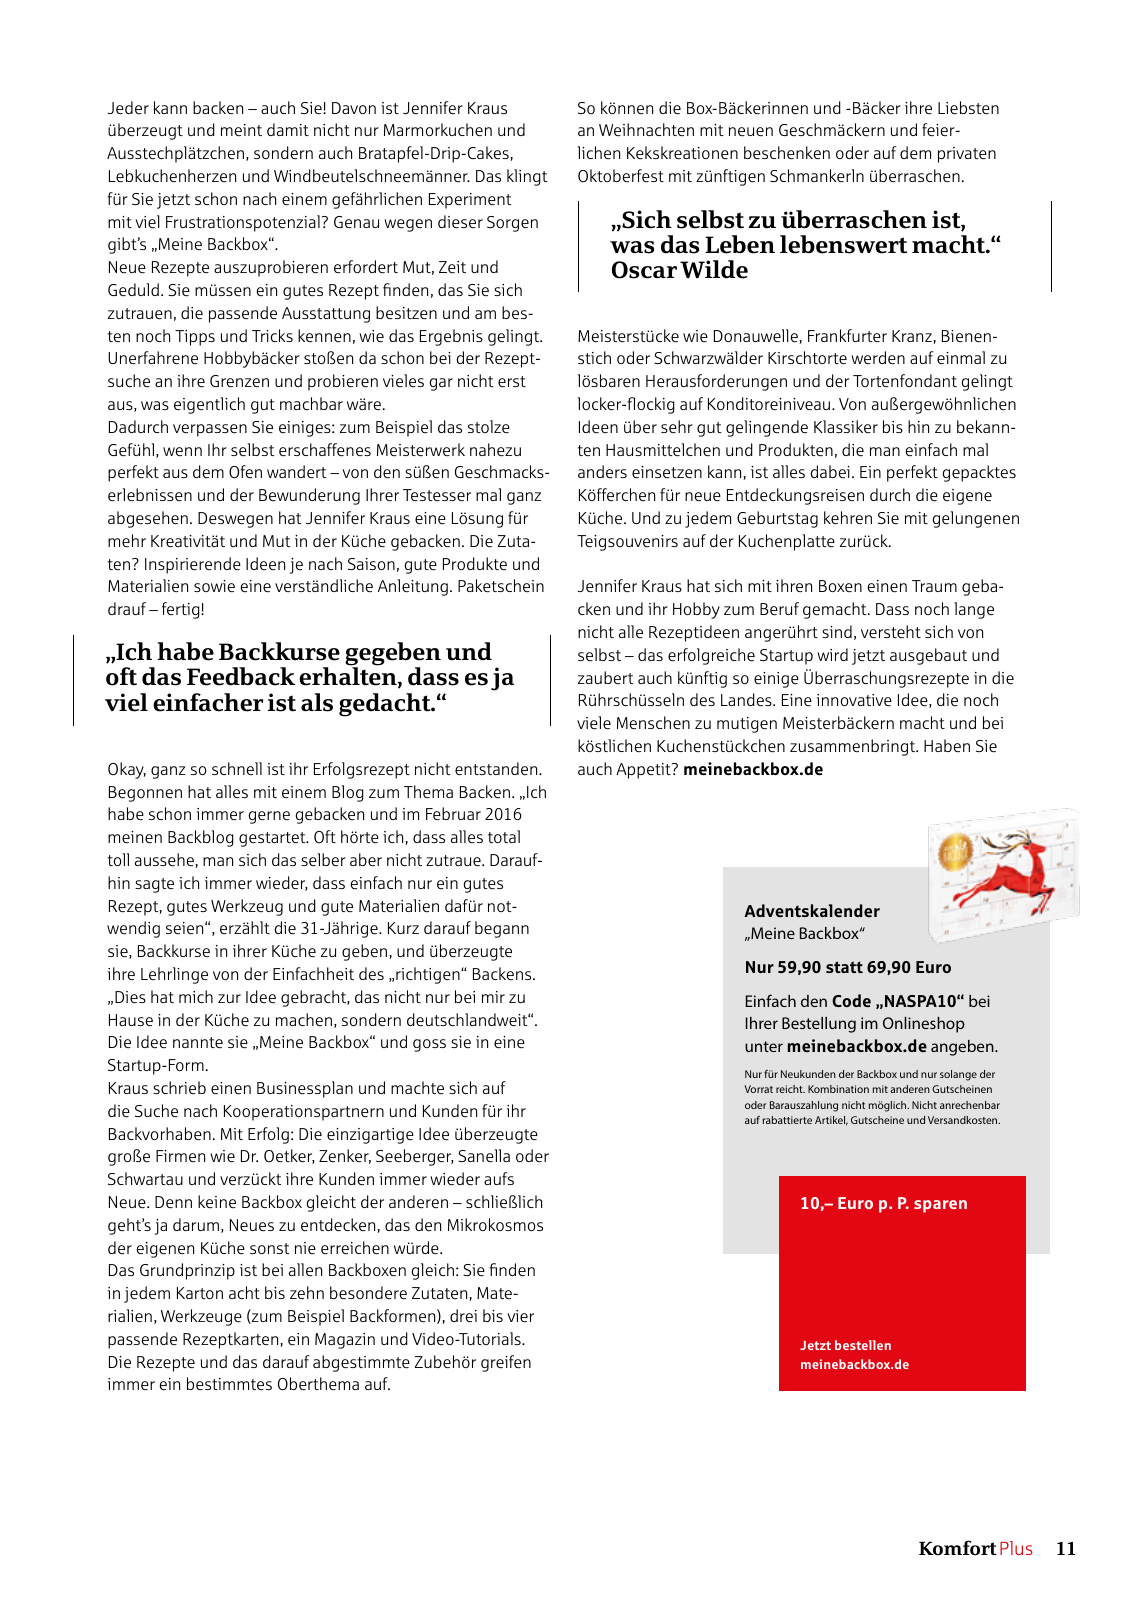 Vorschau Naspa e-paper KP 62 Seite 11